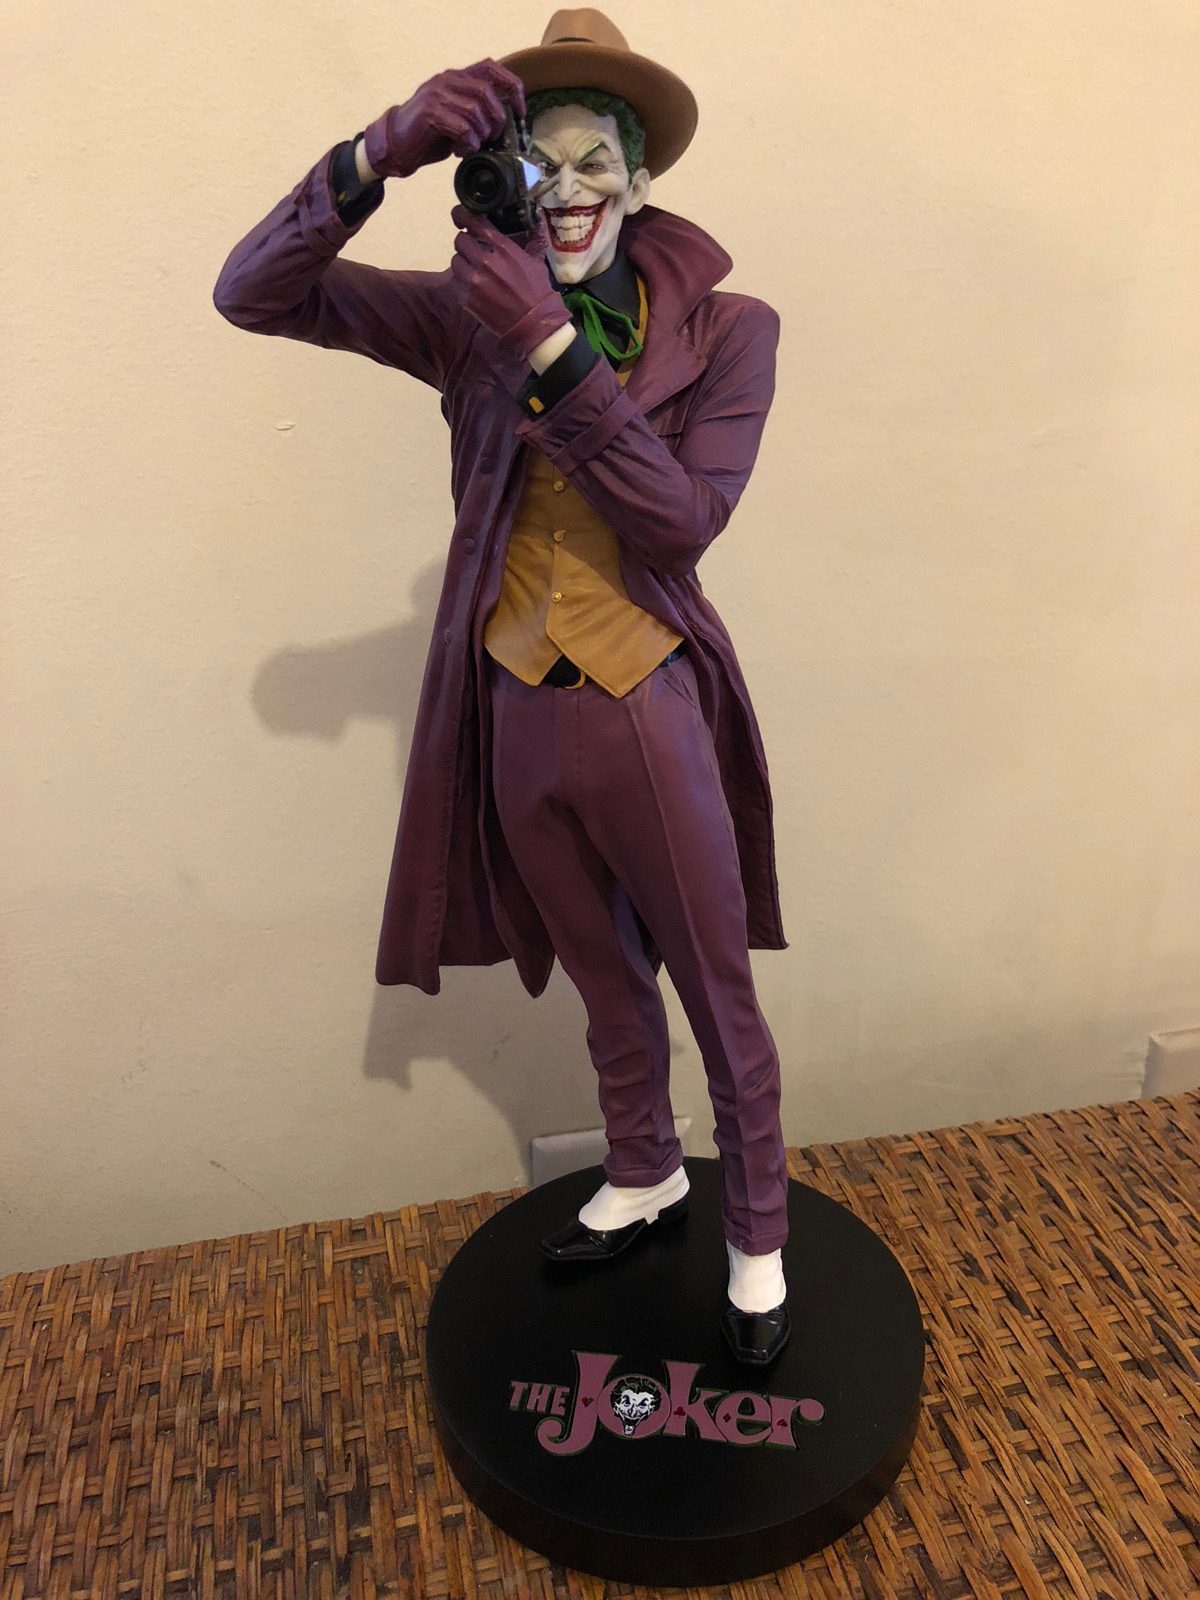 #1. The Joker by Brian Bolland